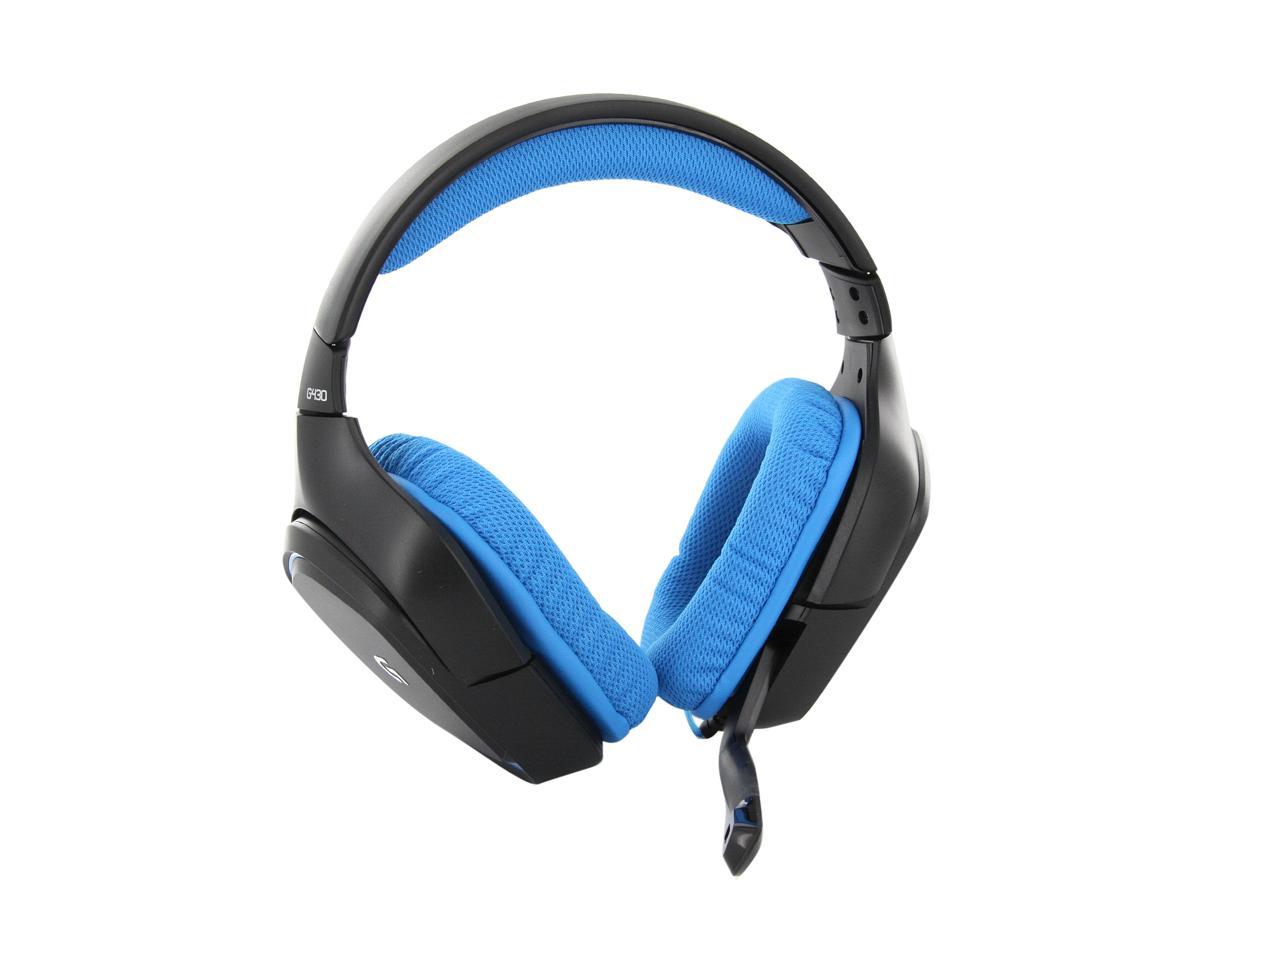 Logitech G430 Circumaural Surround Sound Gaming Headset - Newegg.com